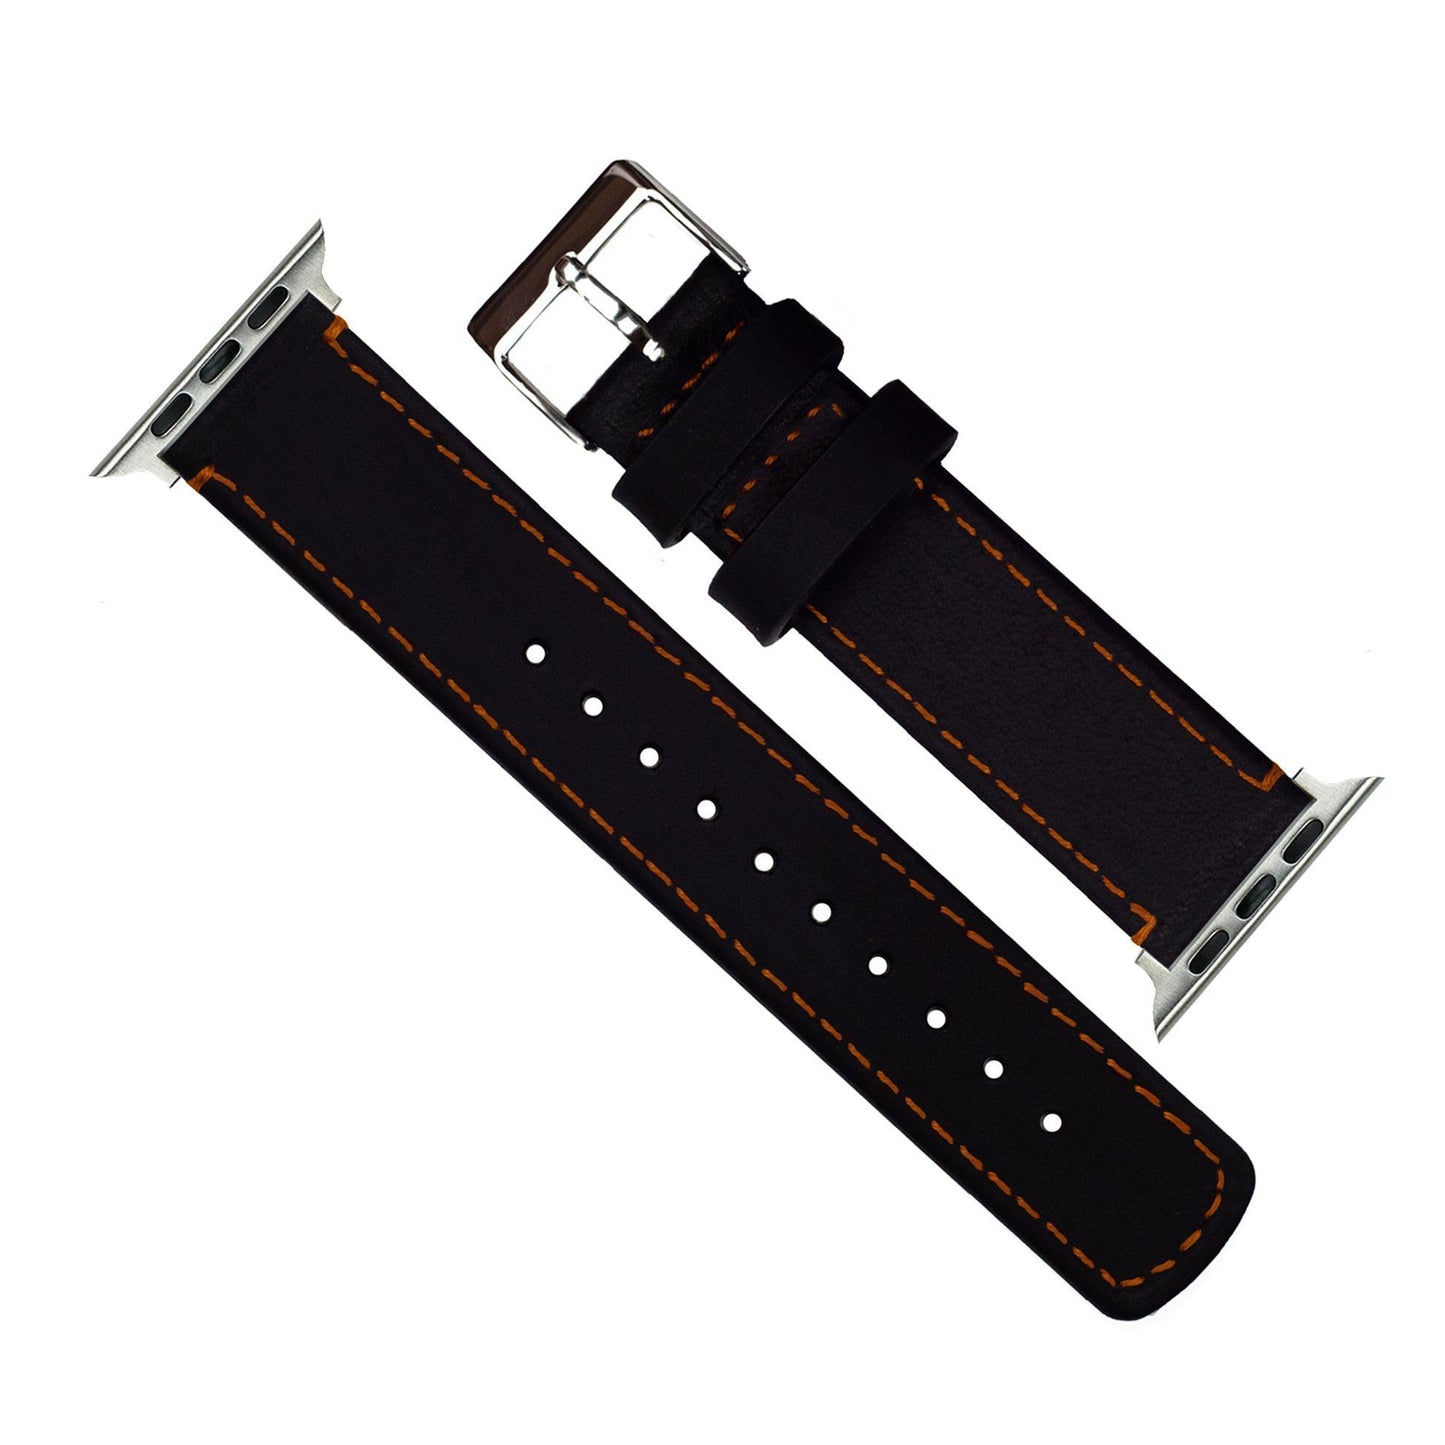 Apple Watch | Black Leather & Orange Stitching - Barton Watch Bands